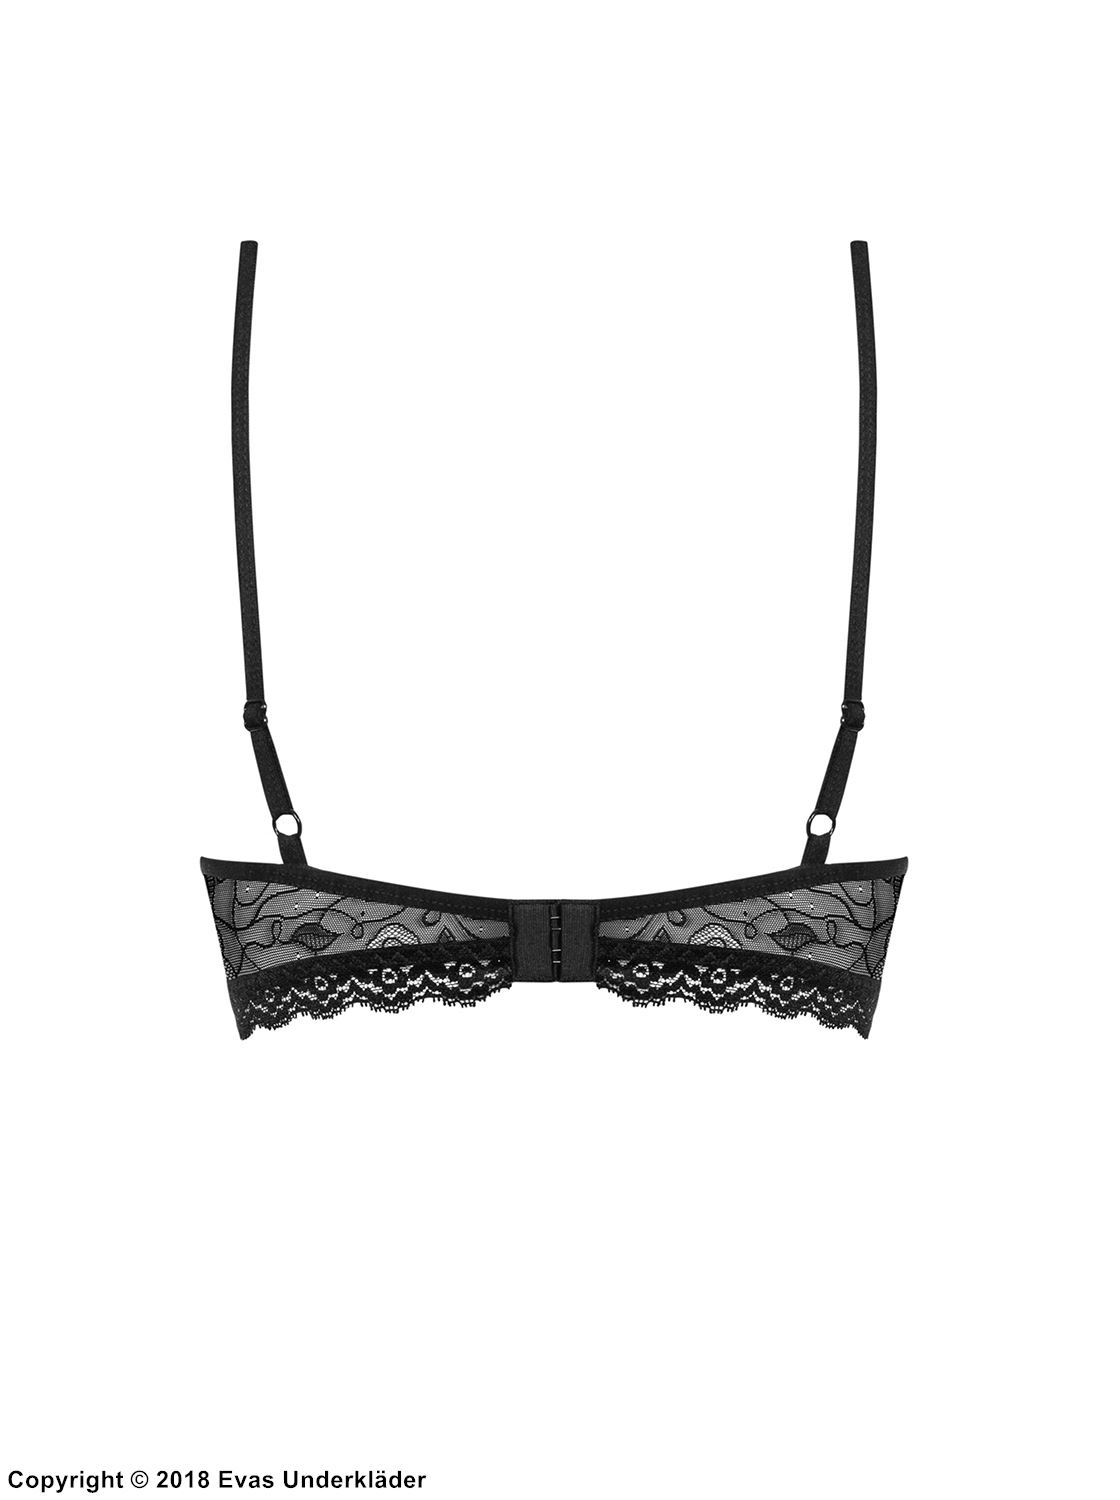 Seductive bra, transparent lace, rhinestones, straps over bust